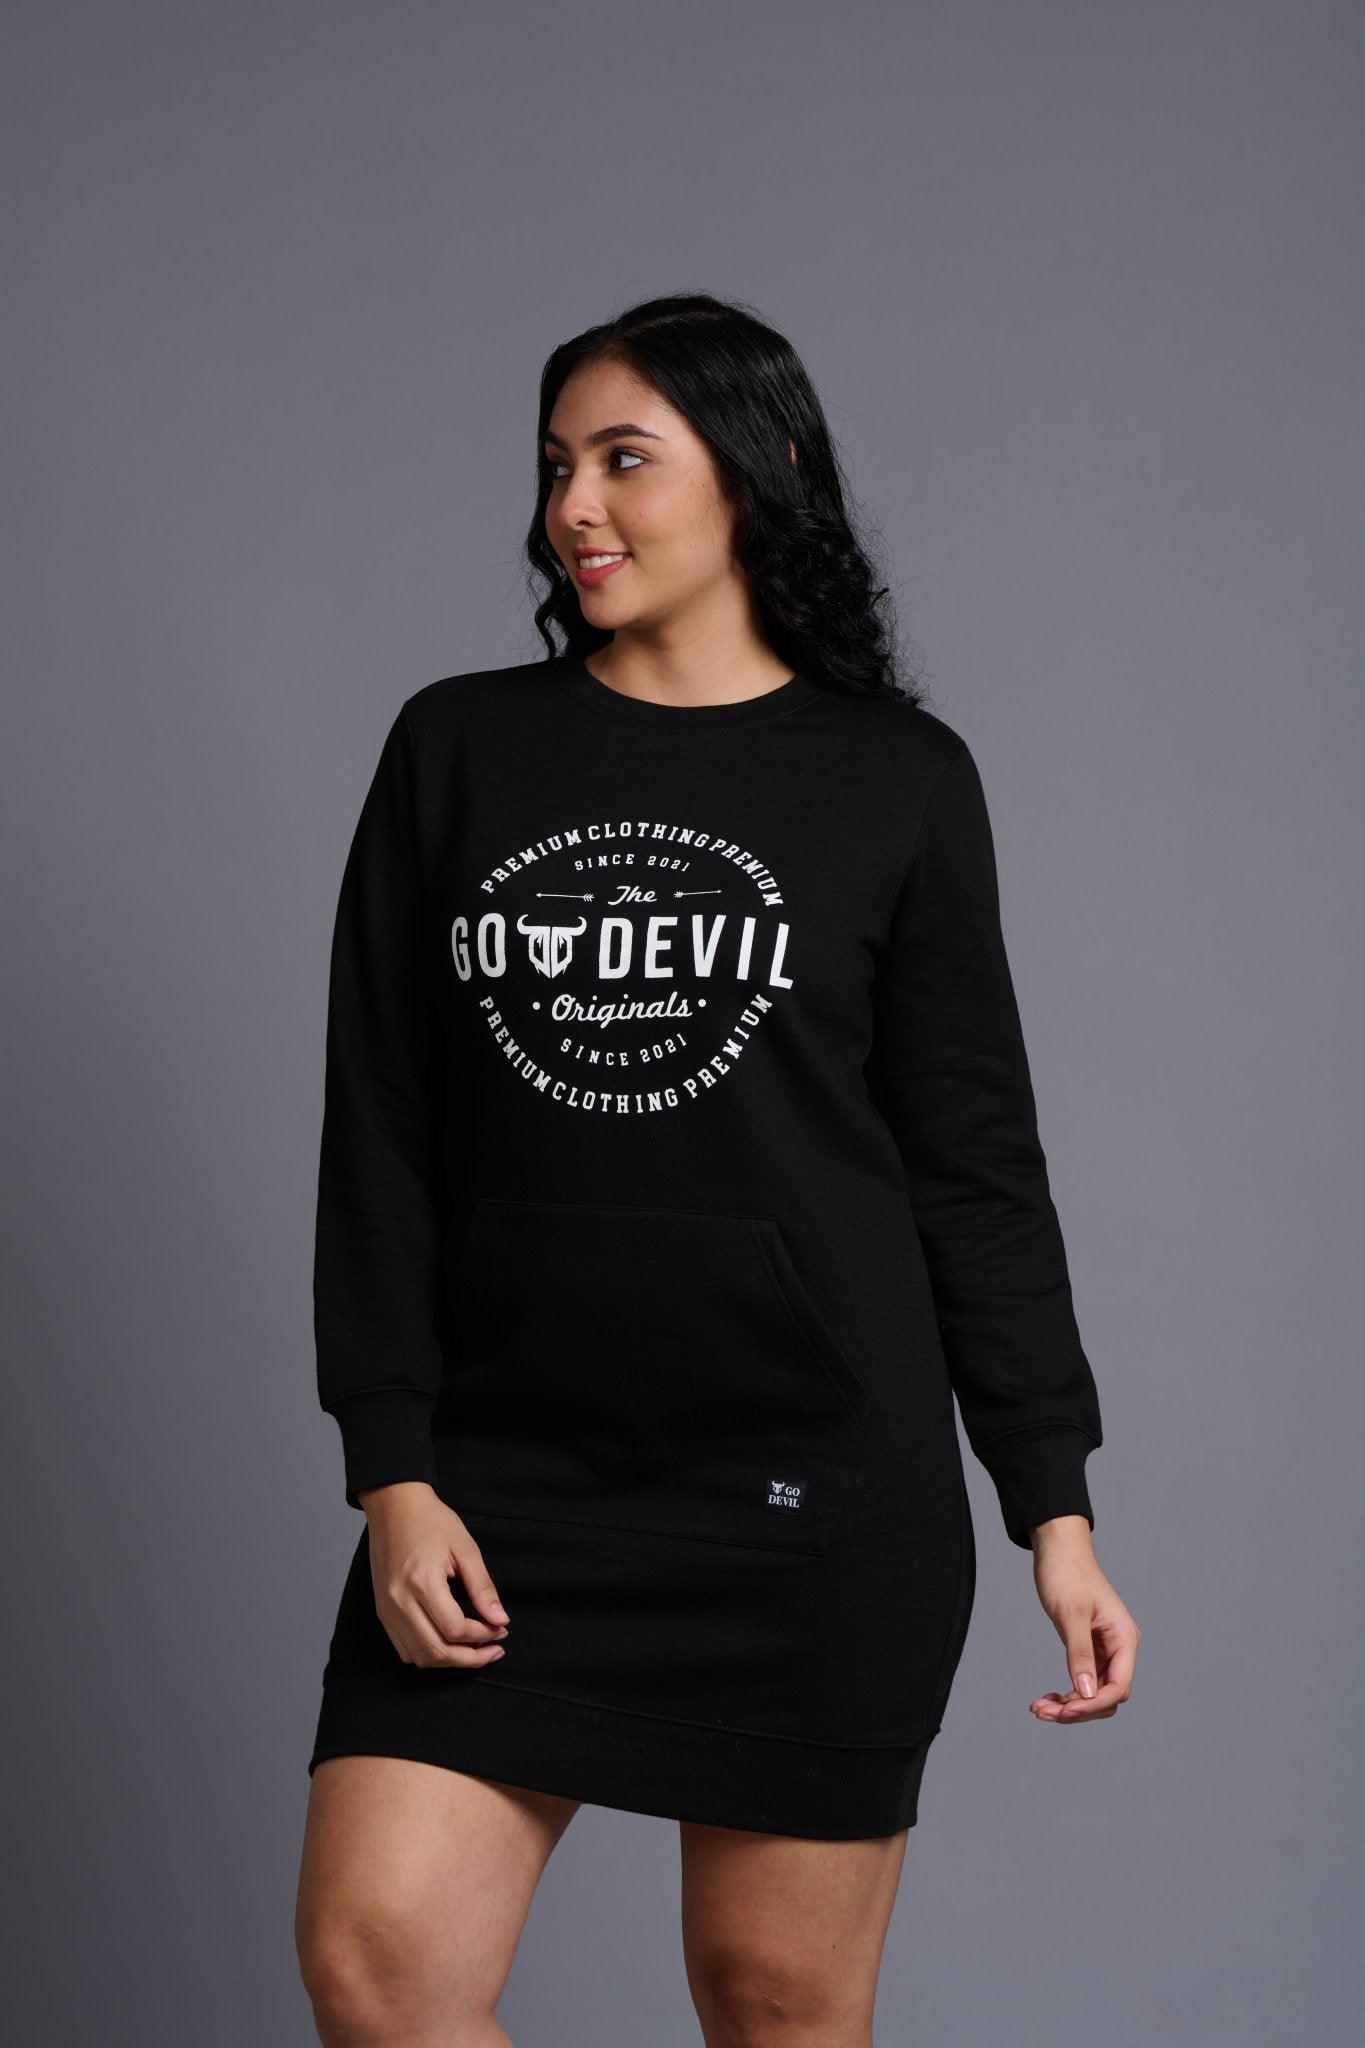 Go Devil Originals Black Sweatdress for Women - Go Devil